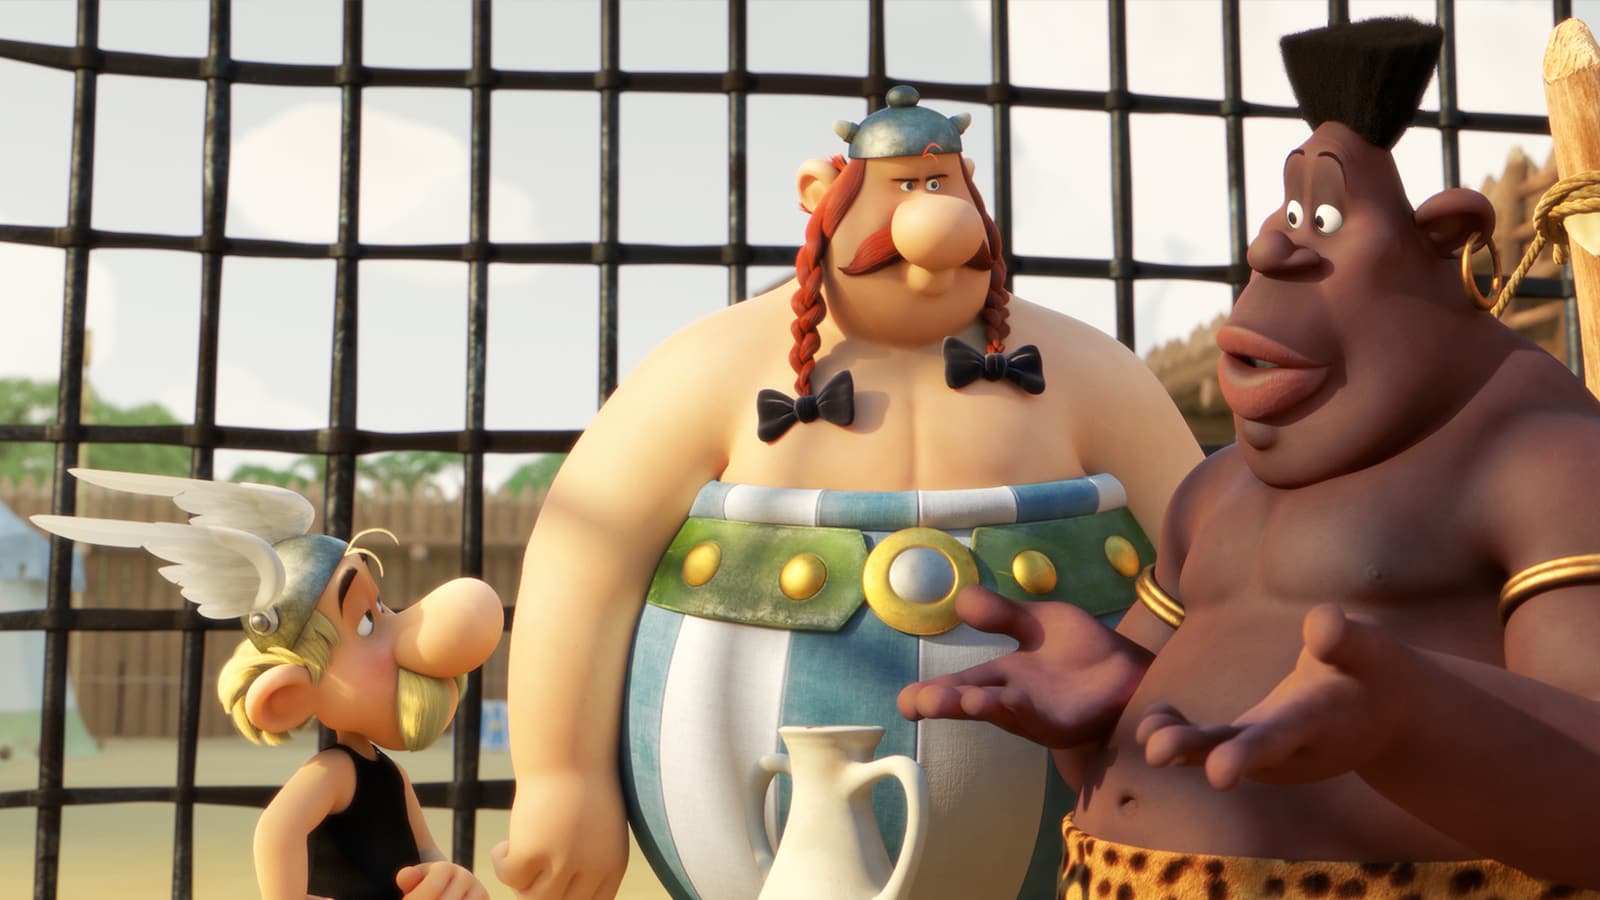 asterix-gudarnas-hemvist-2014